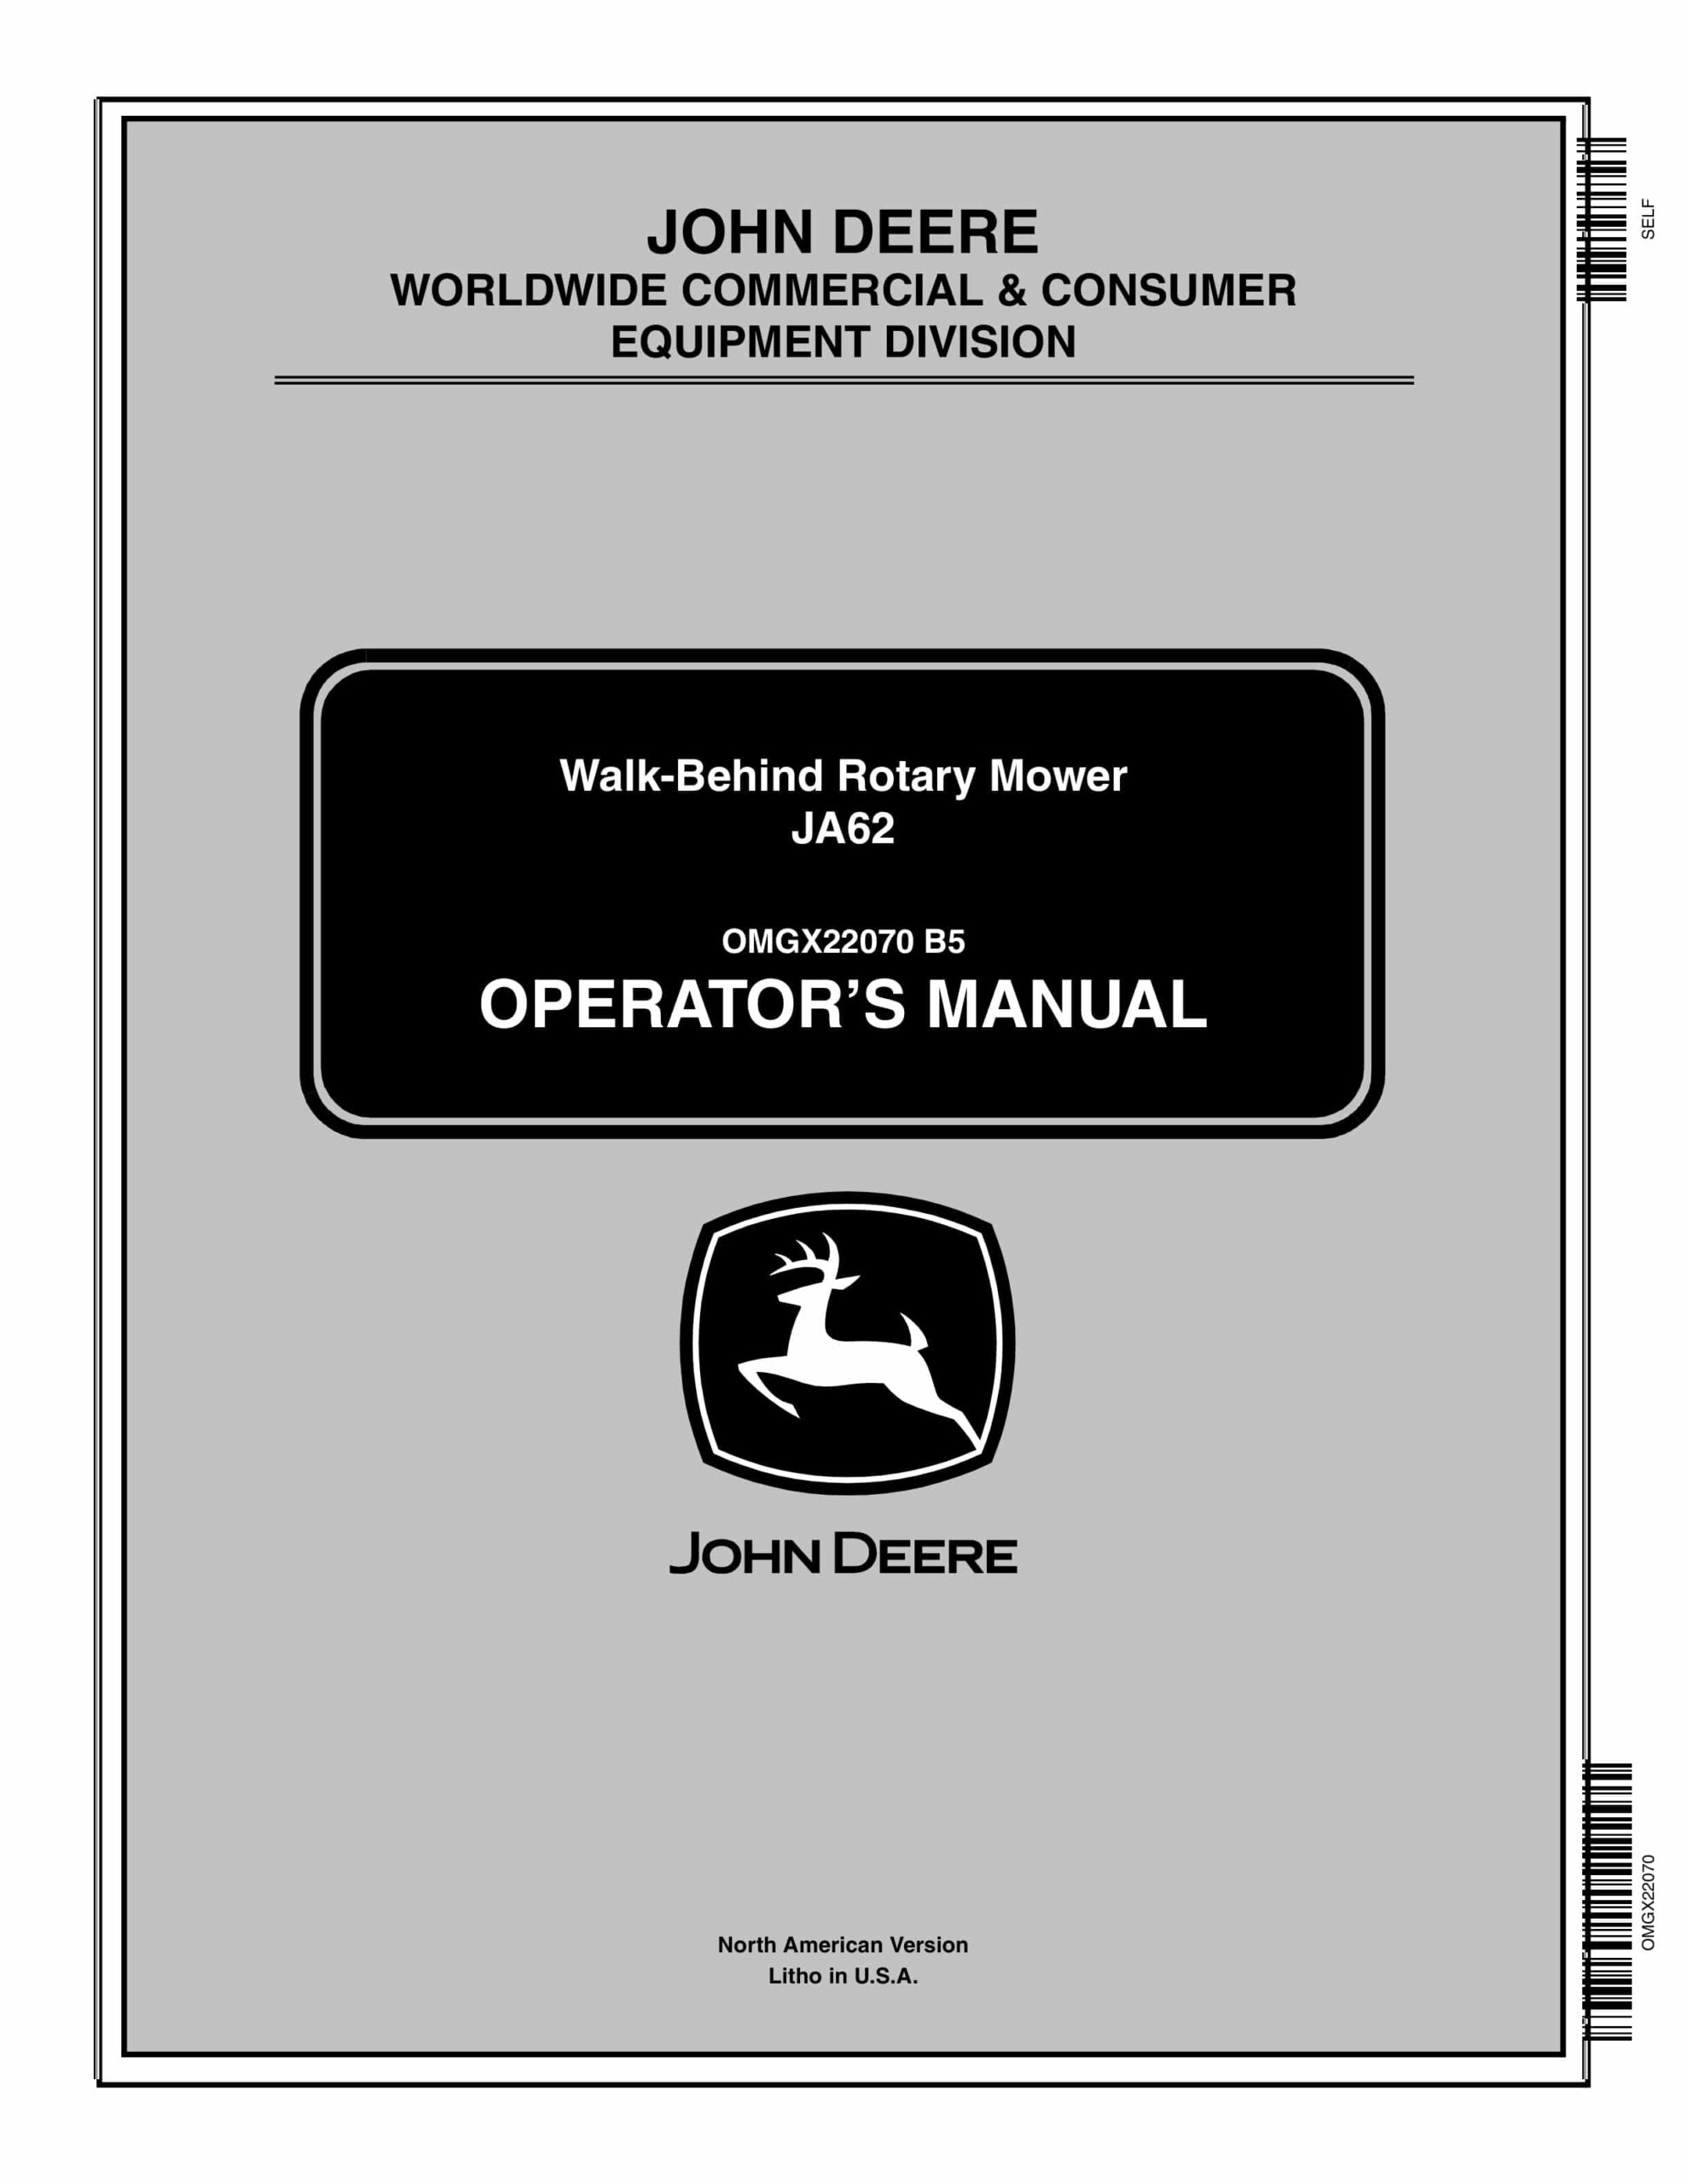 John Deere JA62 Walk-Behind Rotary Mowers Operator Manual OMGX22070-1